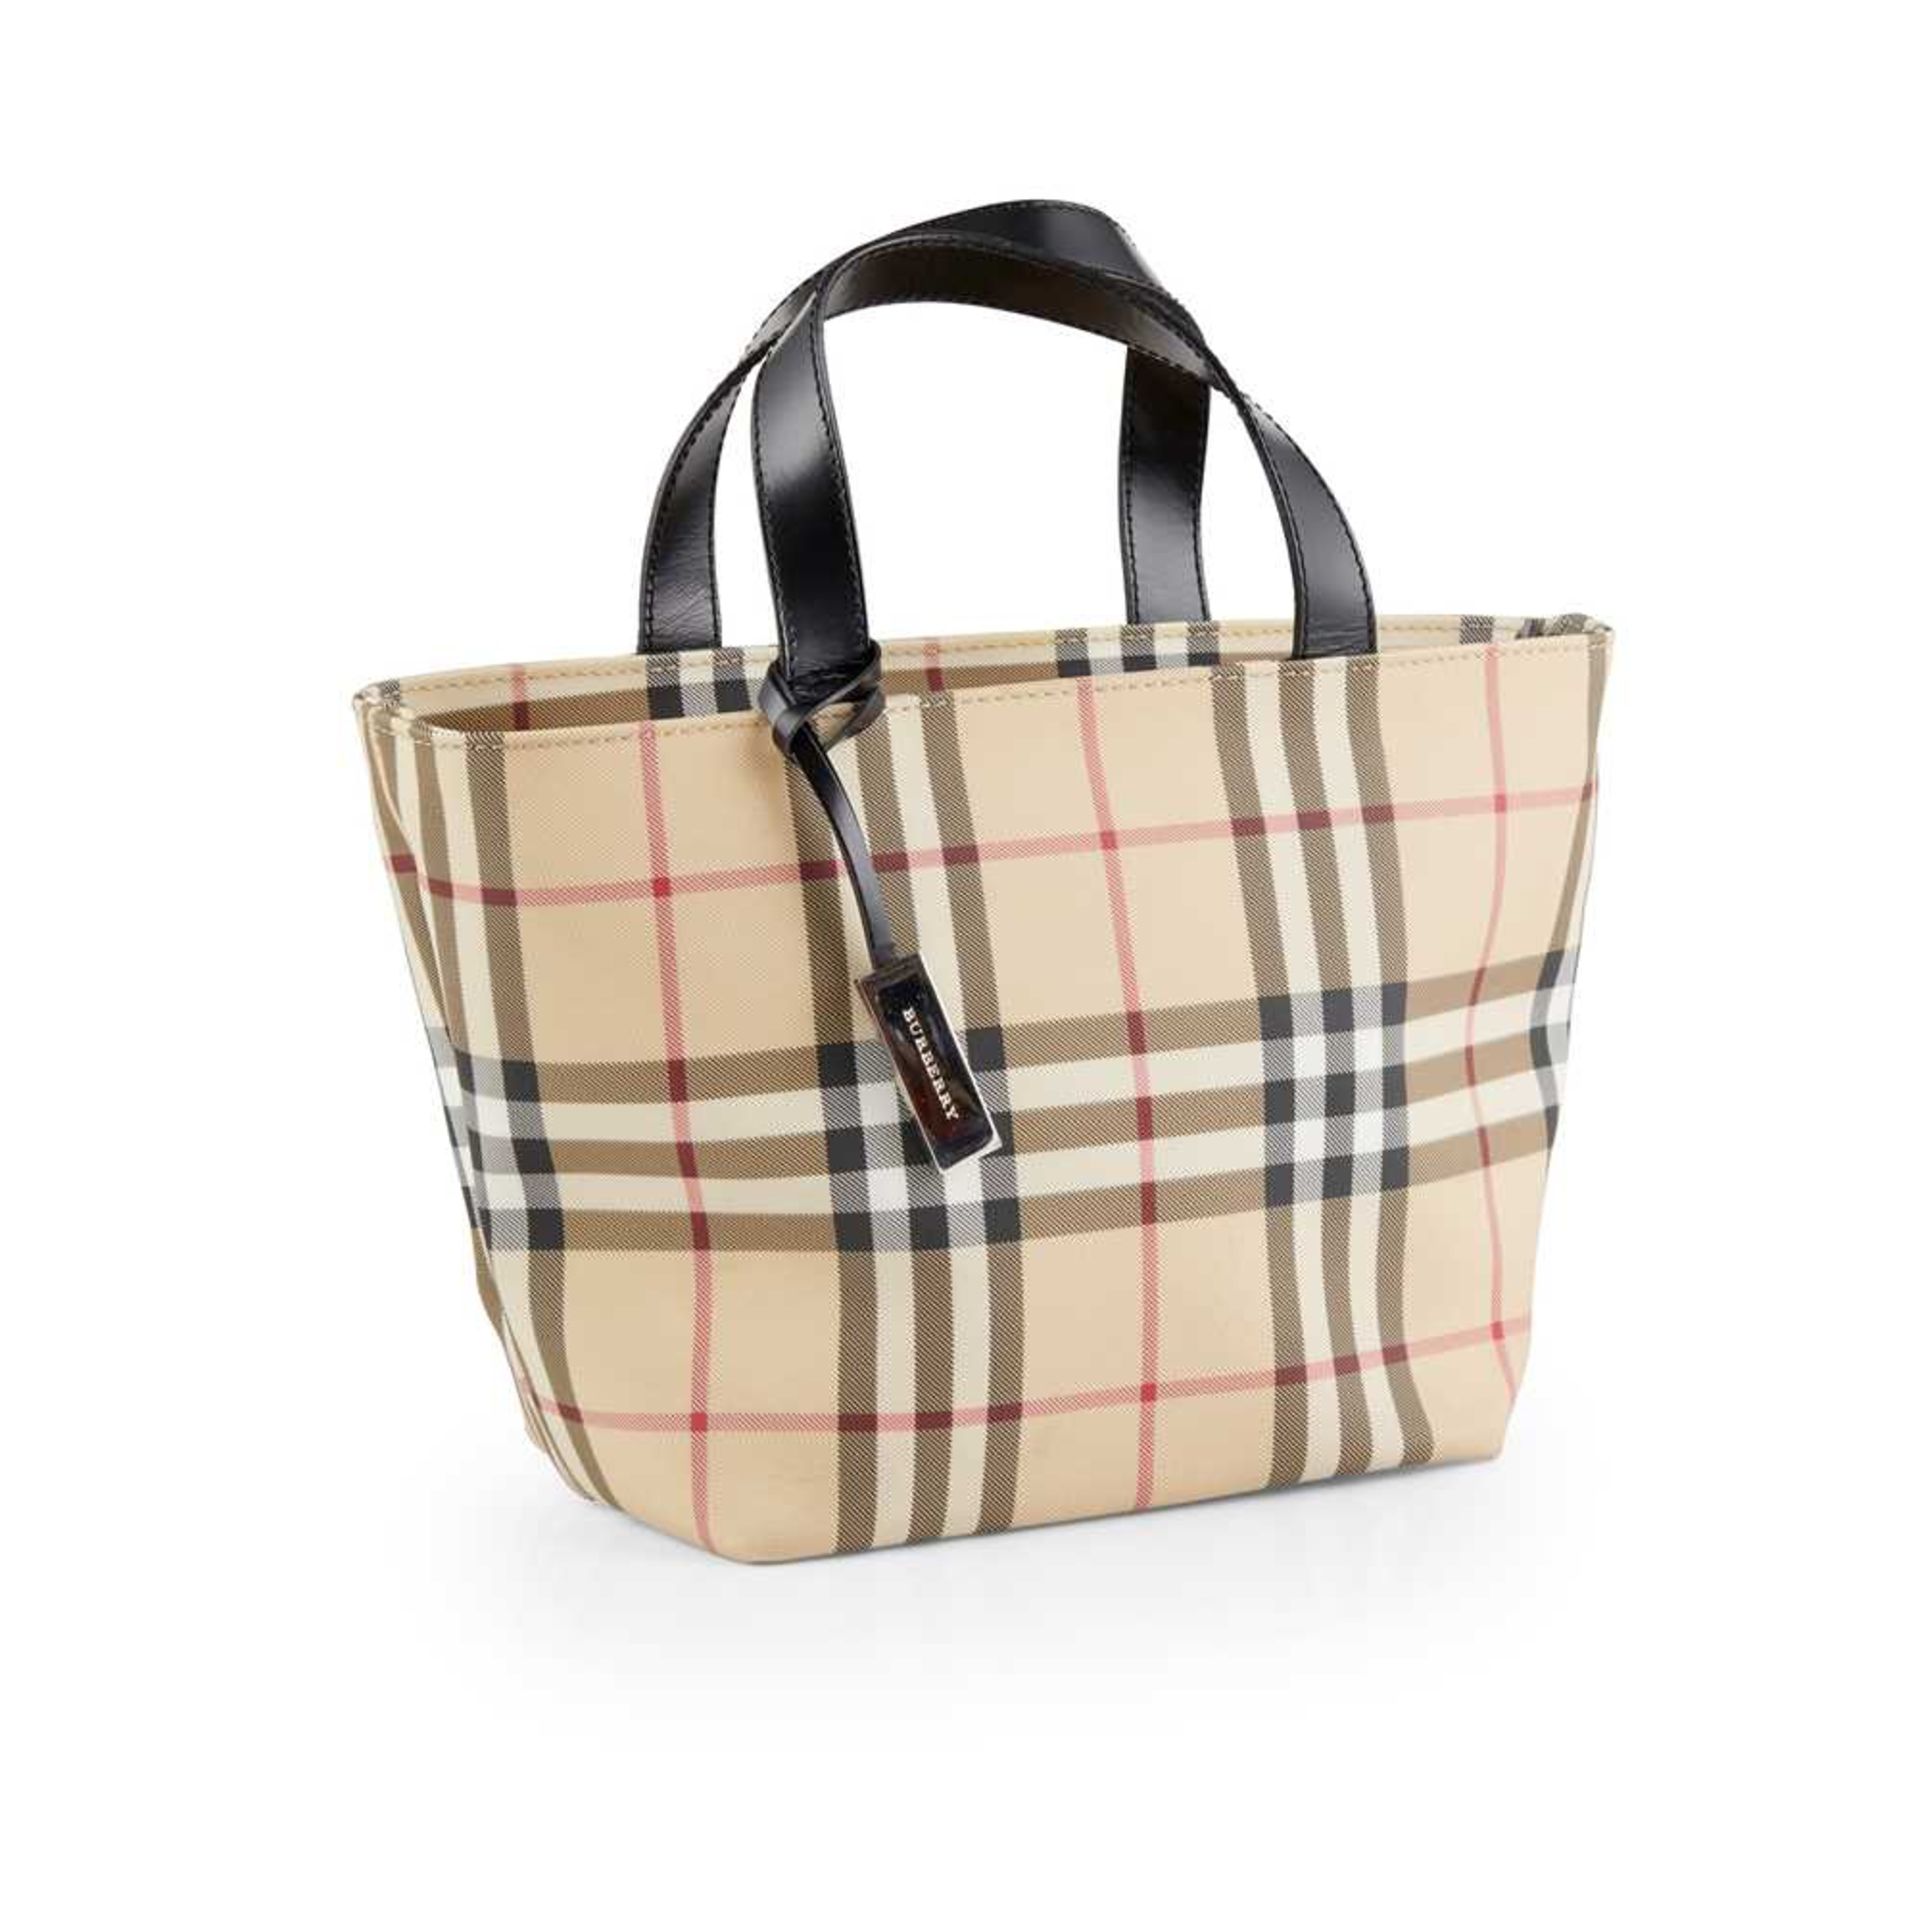 A mini tote handbag, Burberry